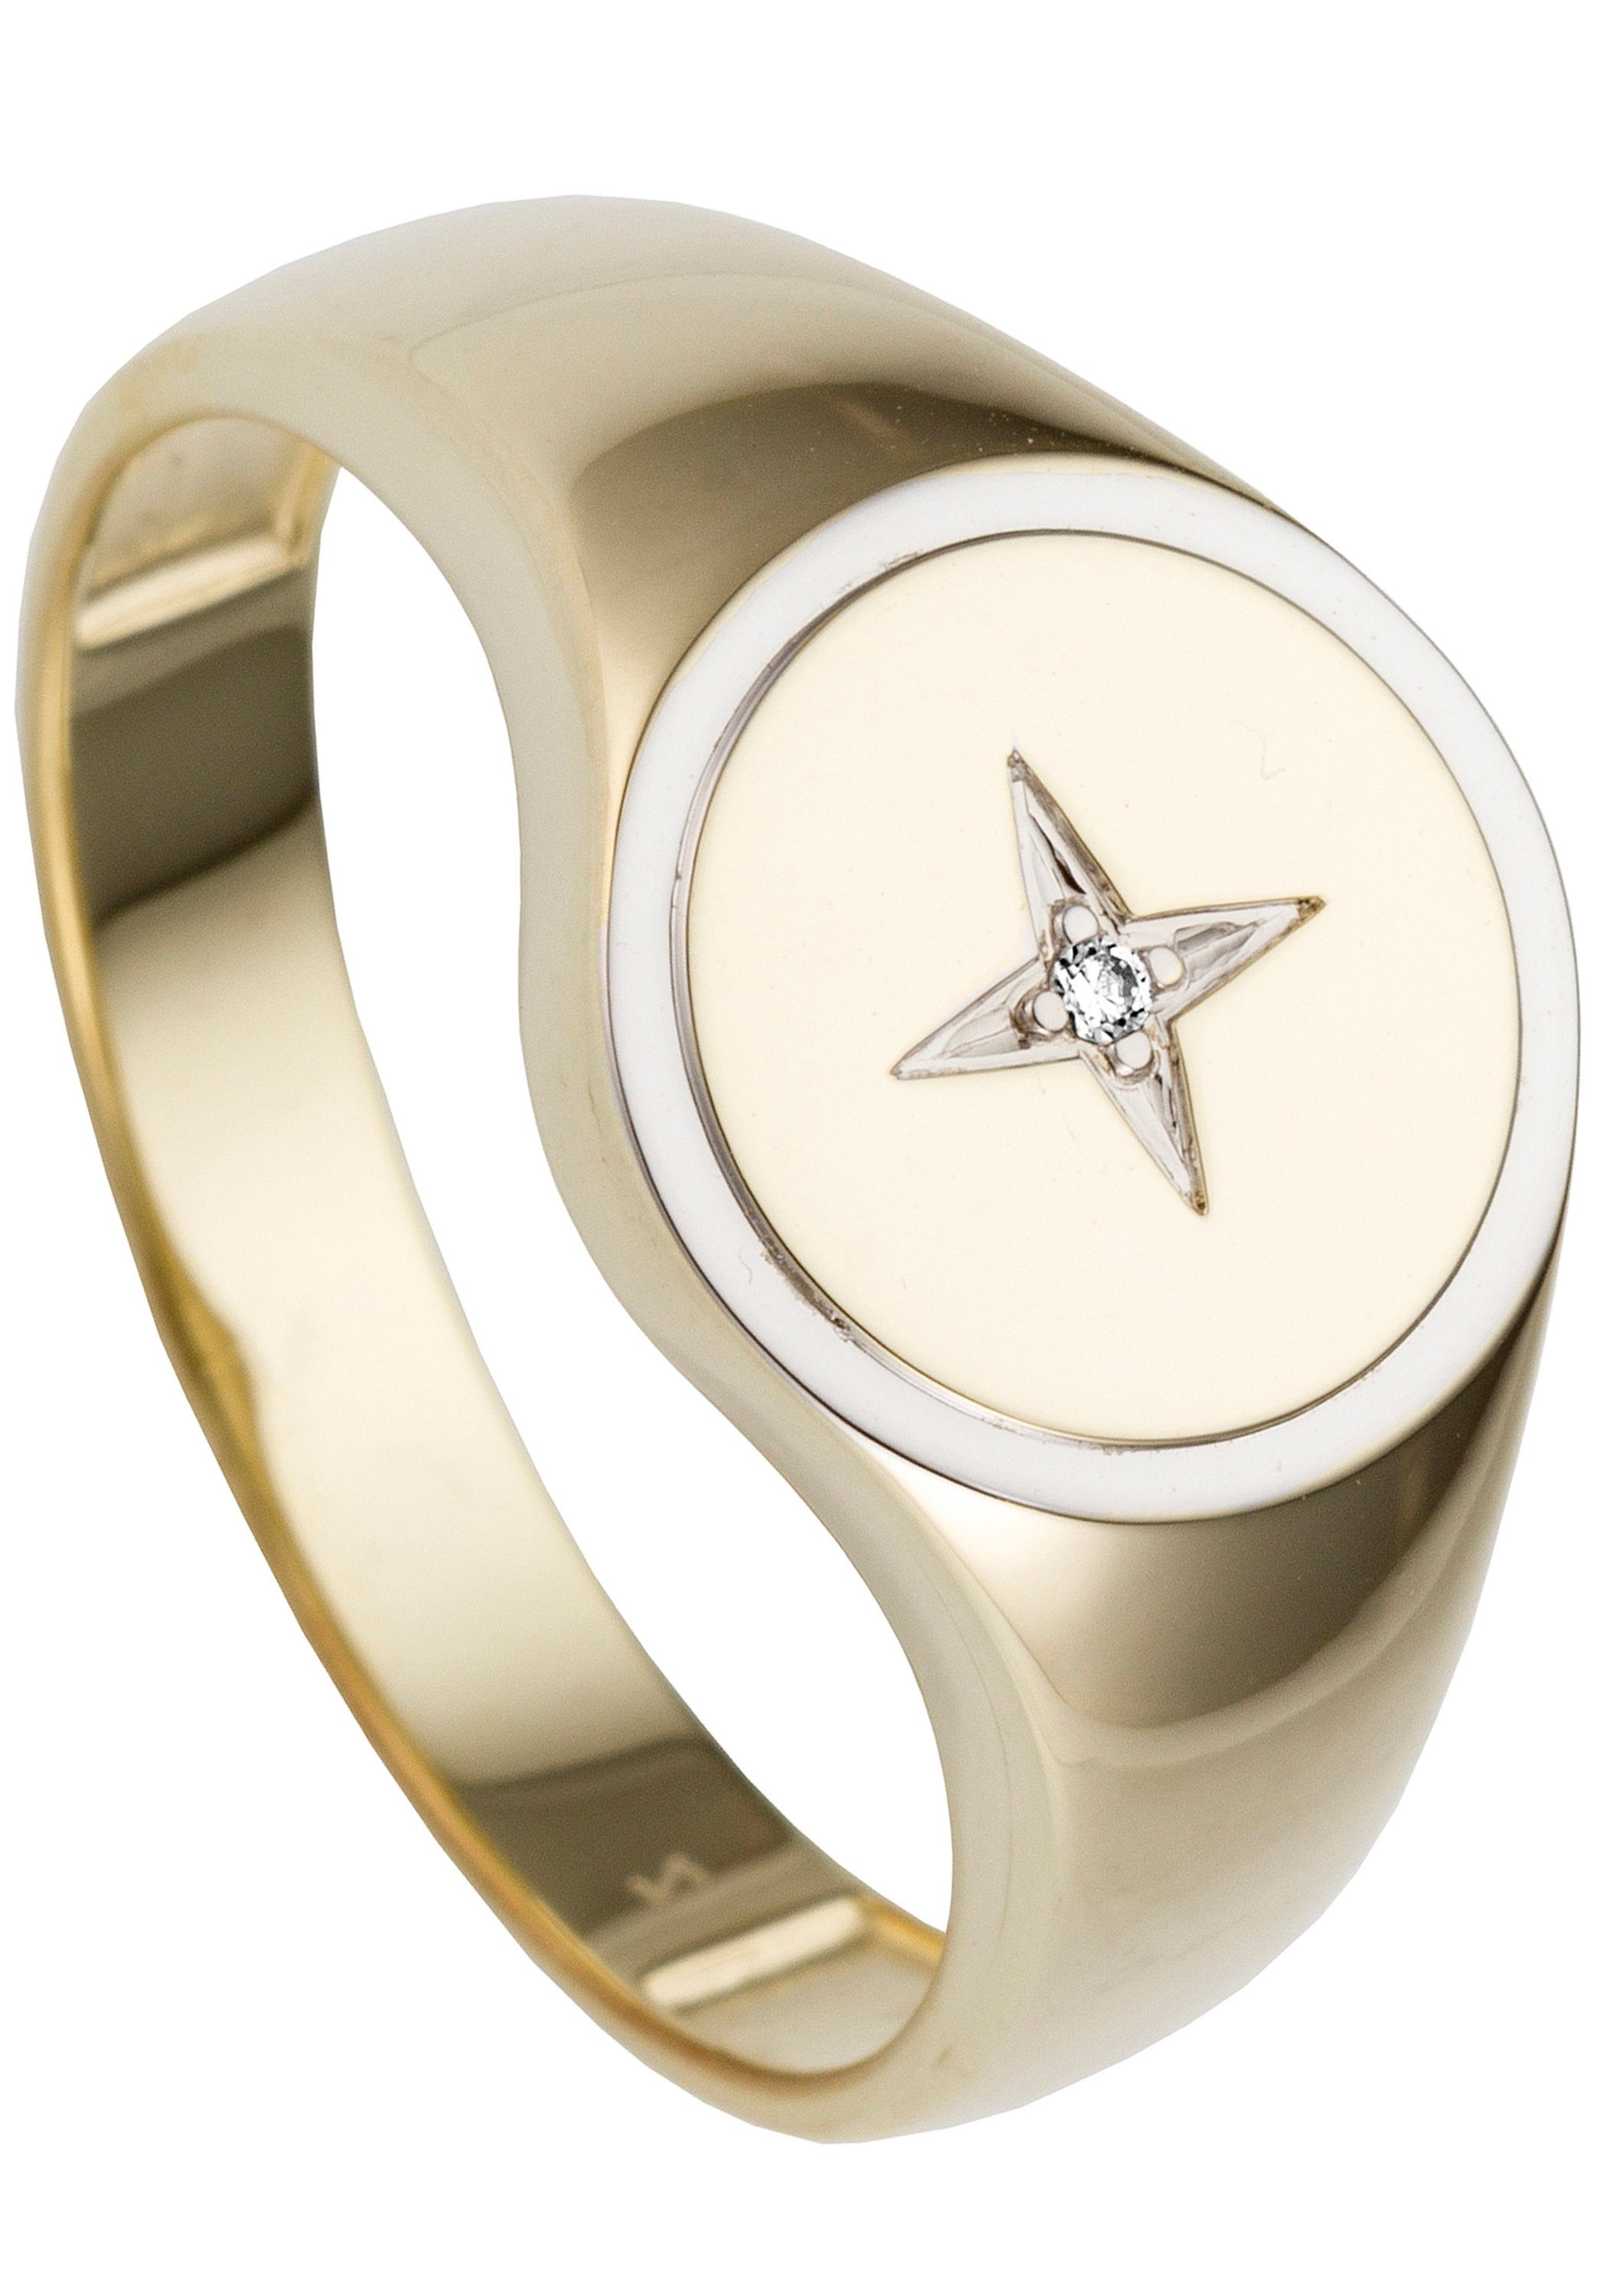 JOBO Fingerring Ring mit Diamant, 585 Gold bicolor | Goldringe